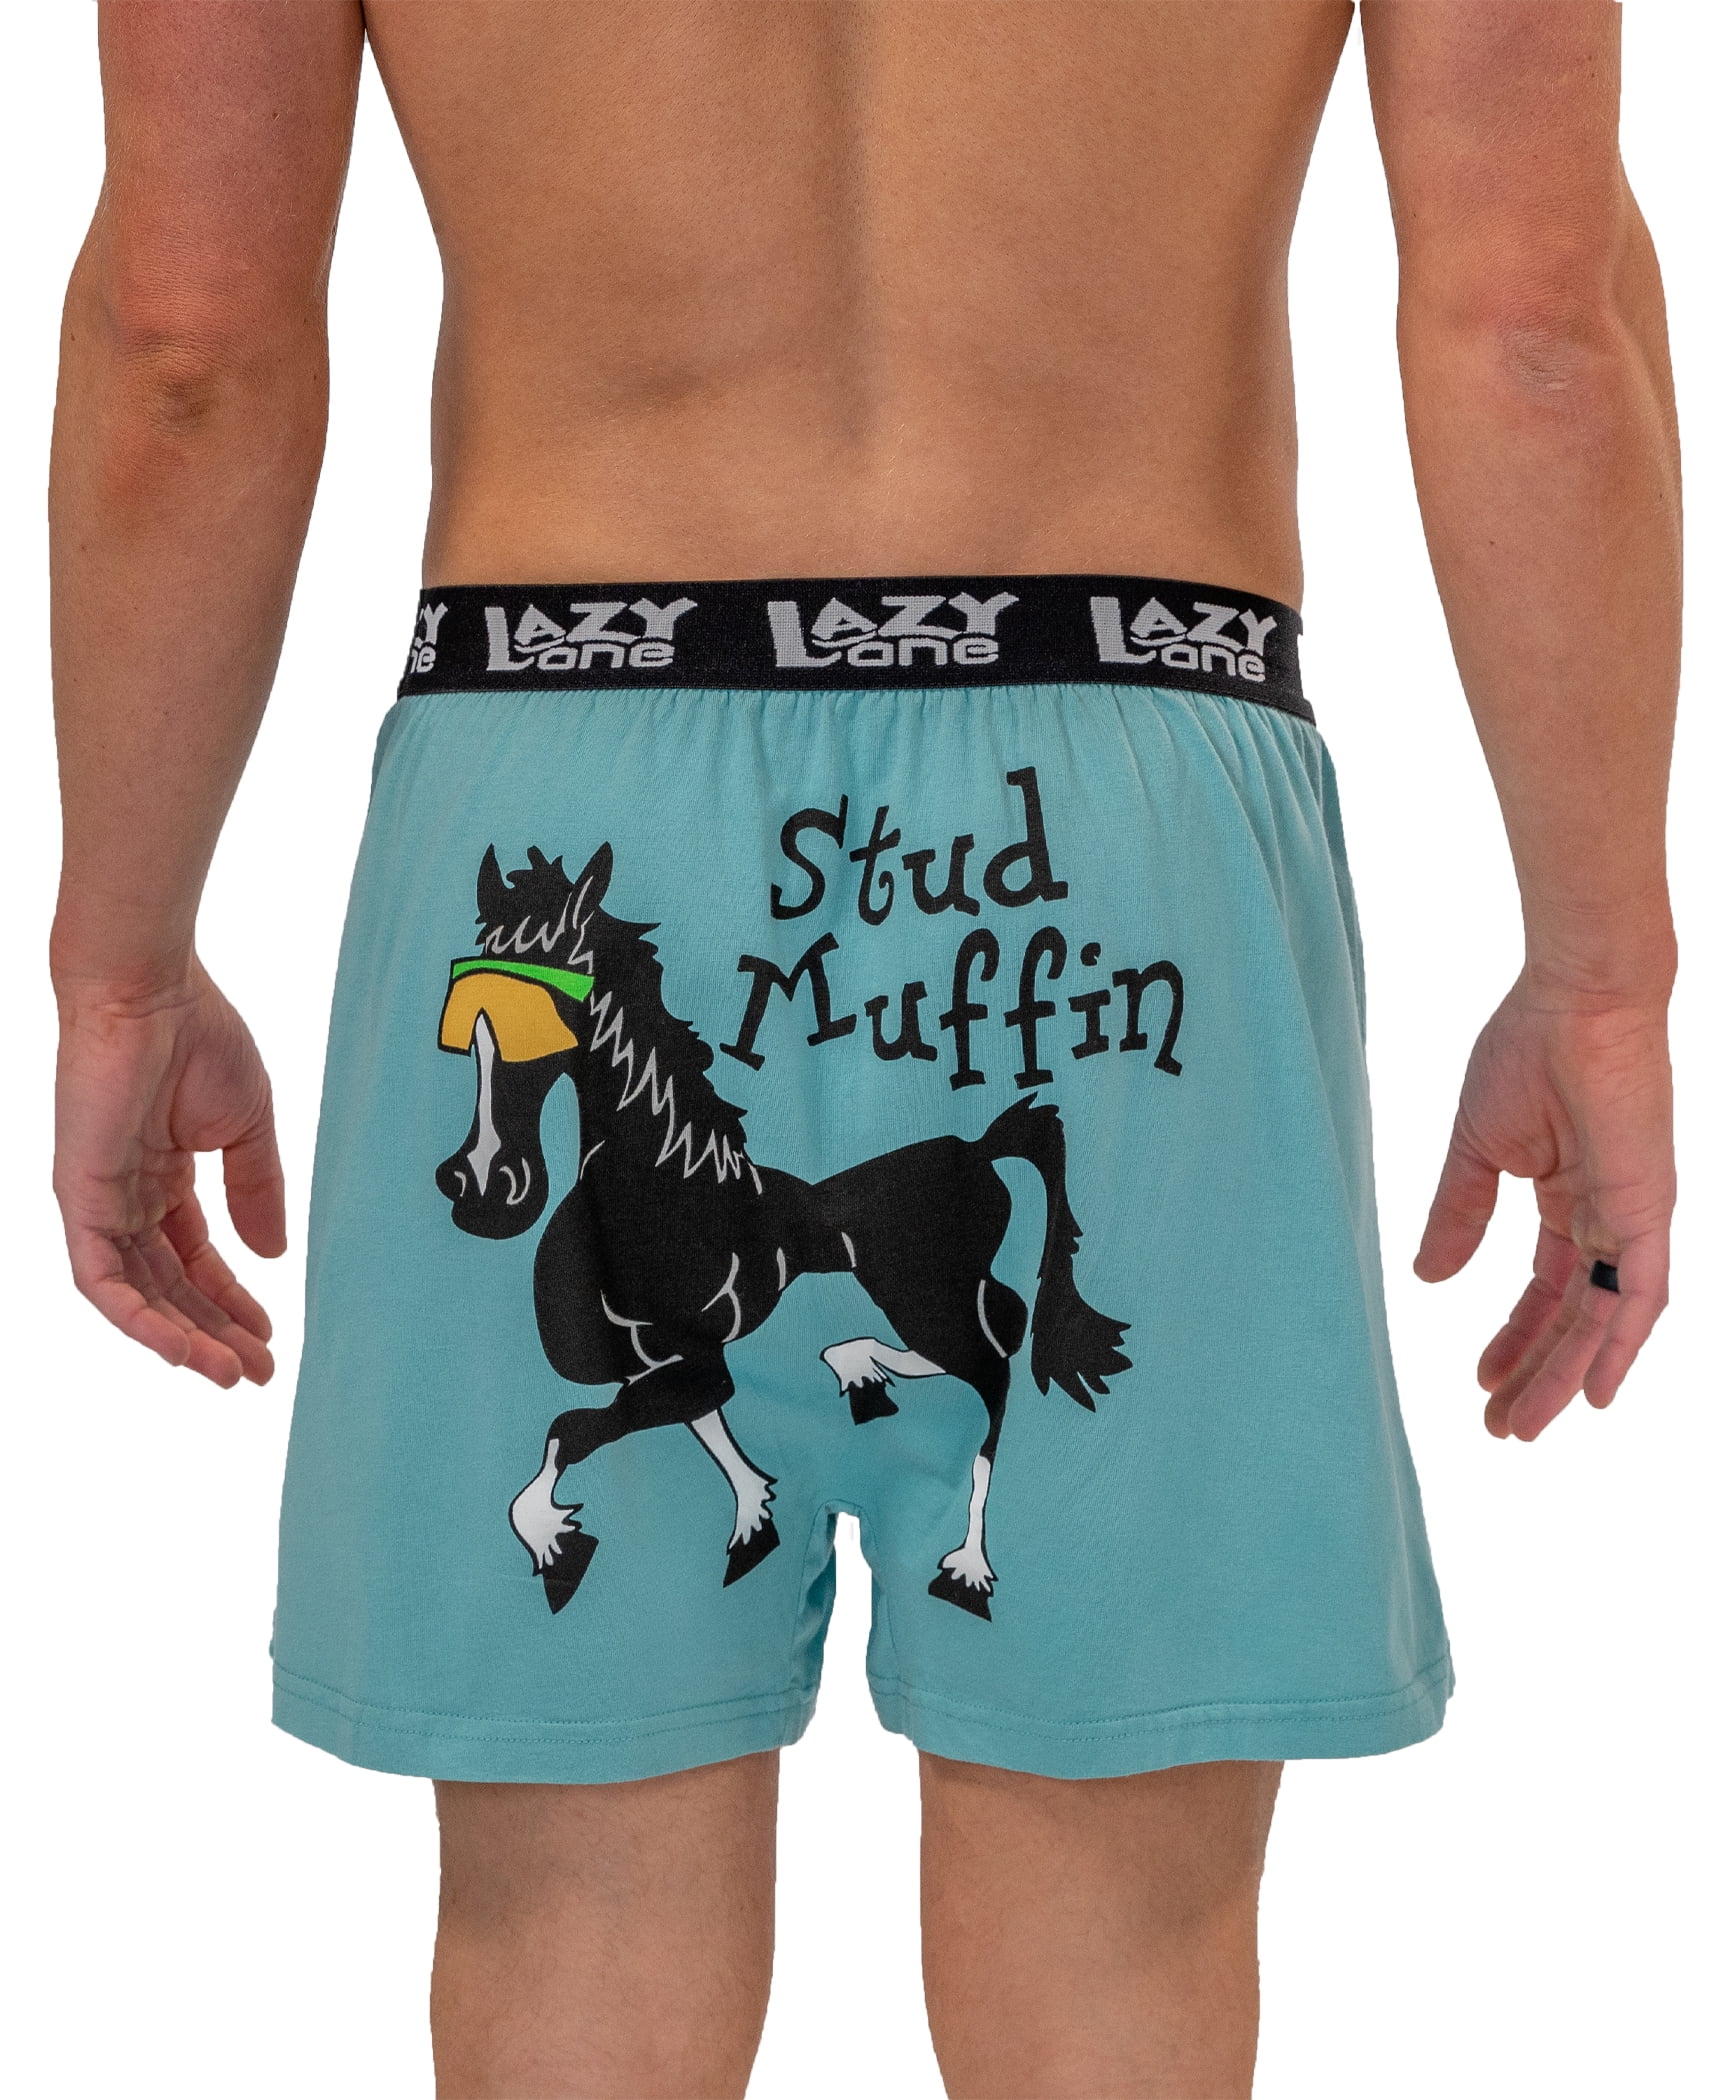 LazyOne Funny Animal Boxers, Stud Muffin, Humorous Underwear, Gag